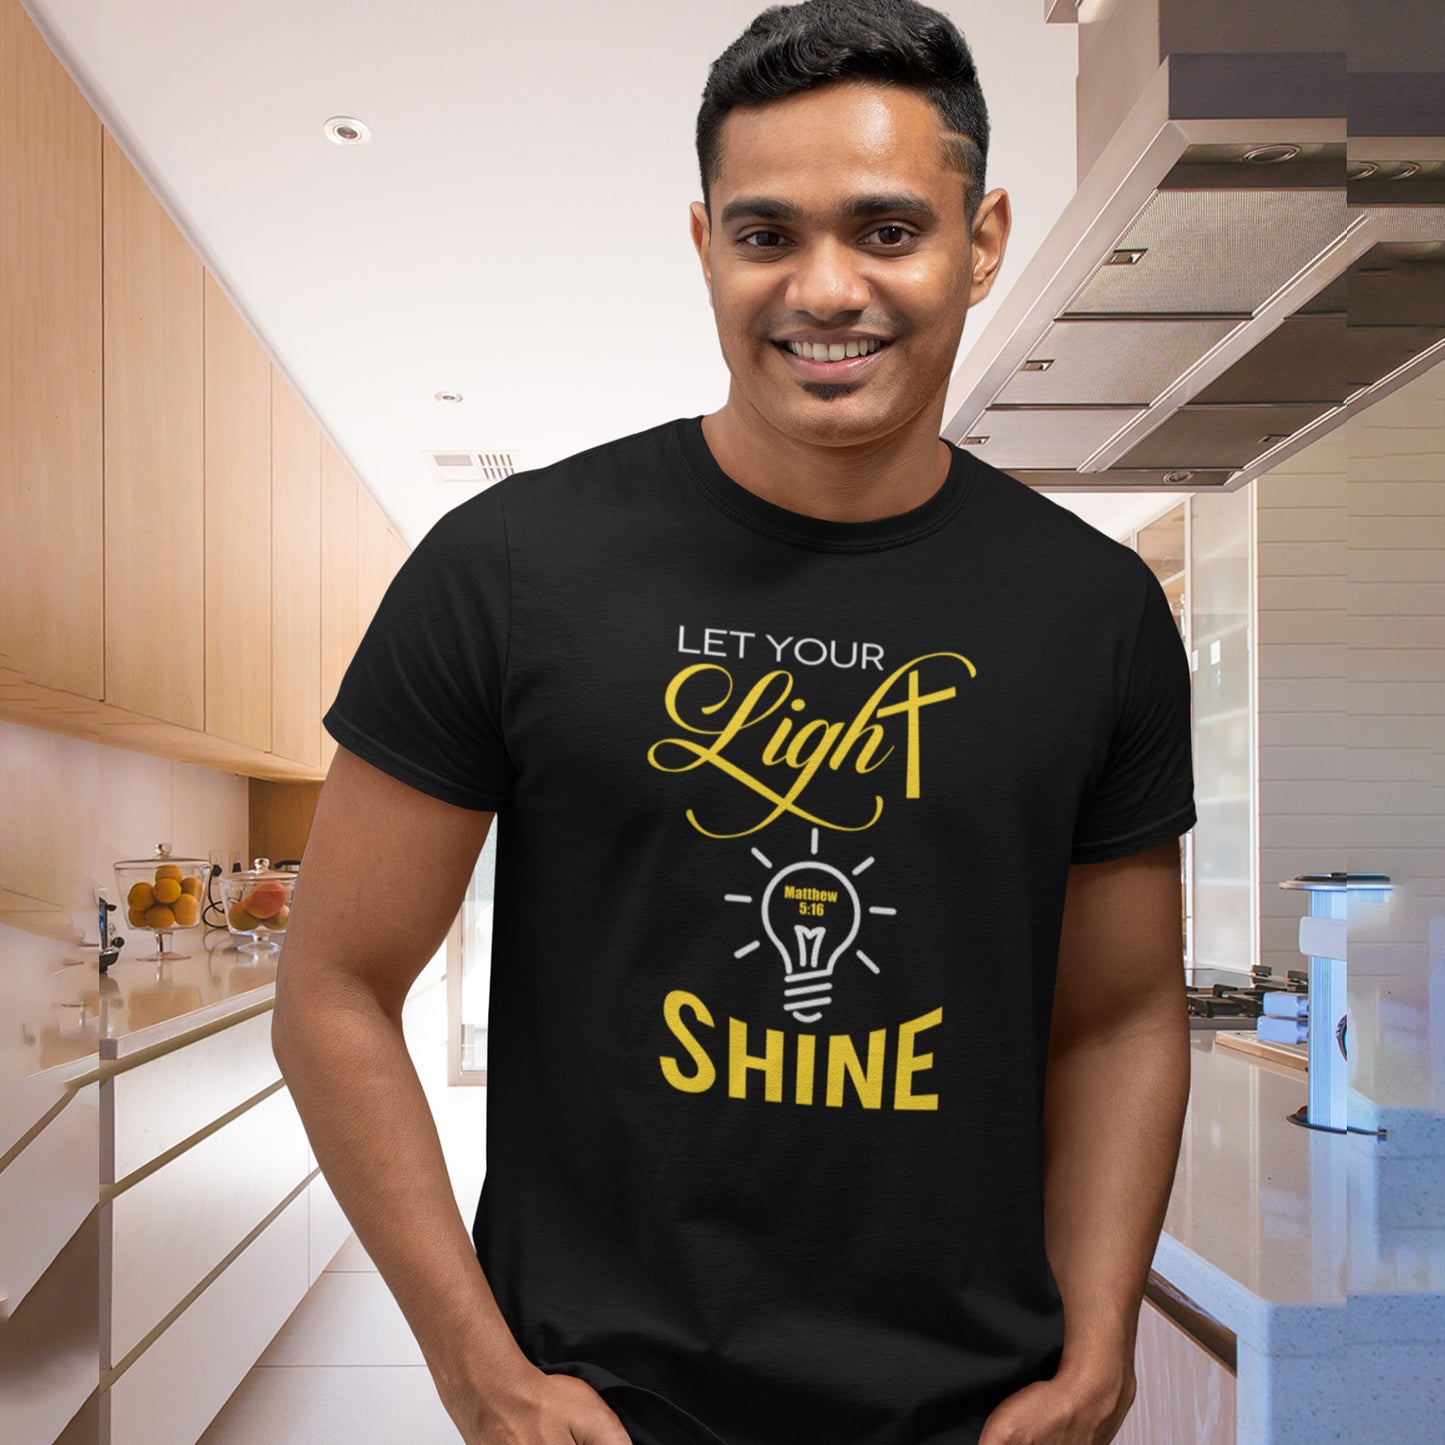 Let your Light Shine - Men T-shirt